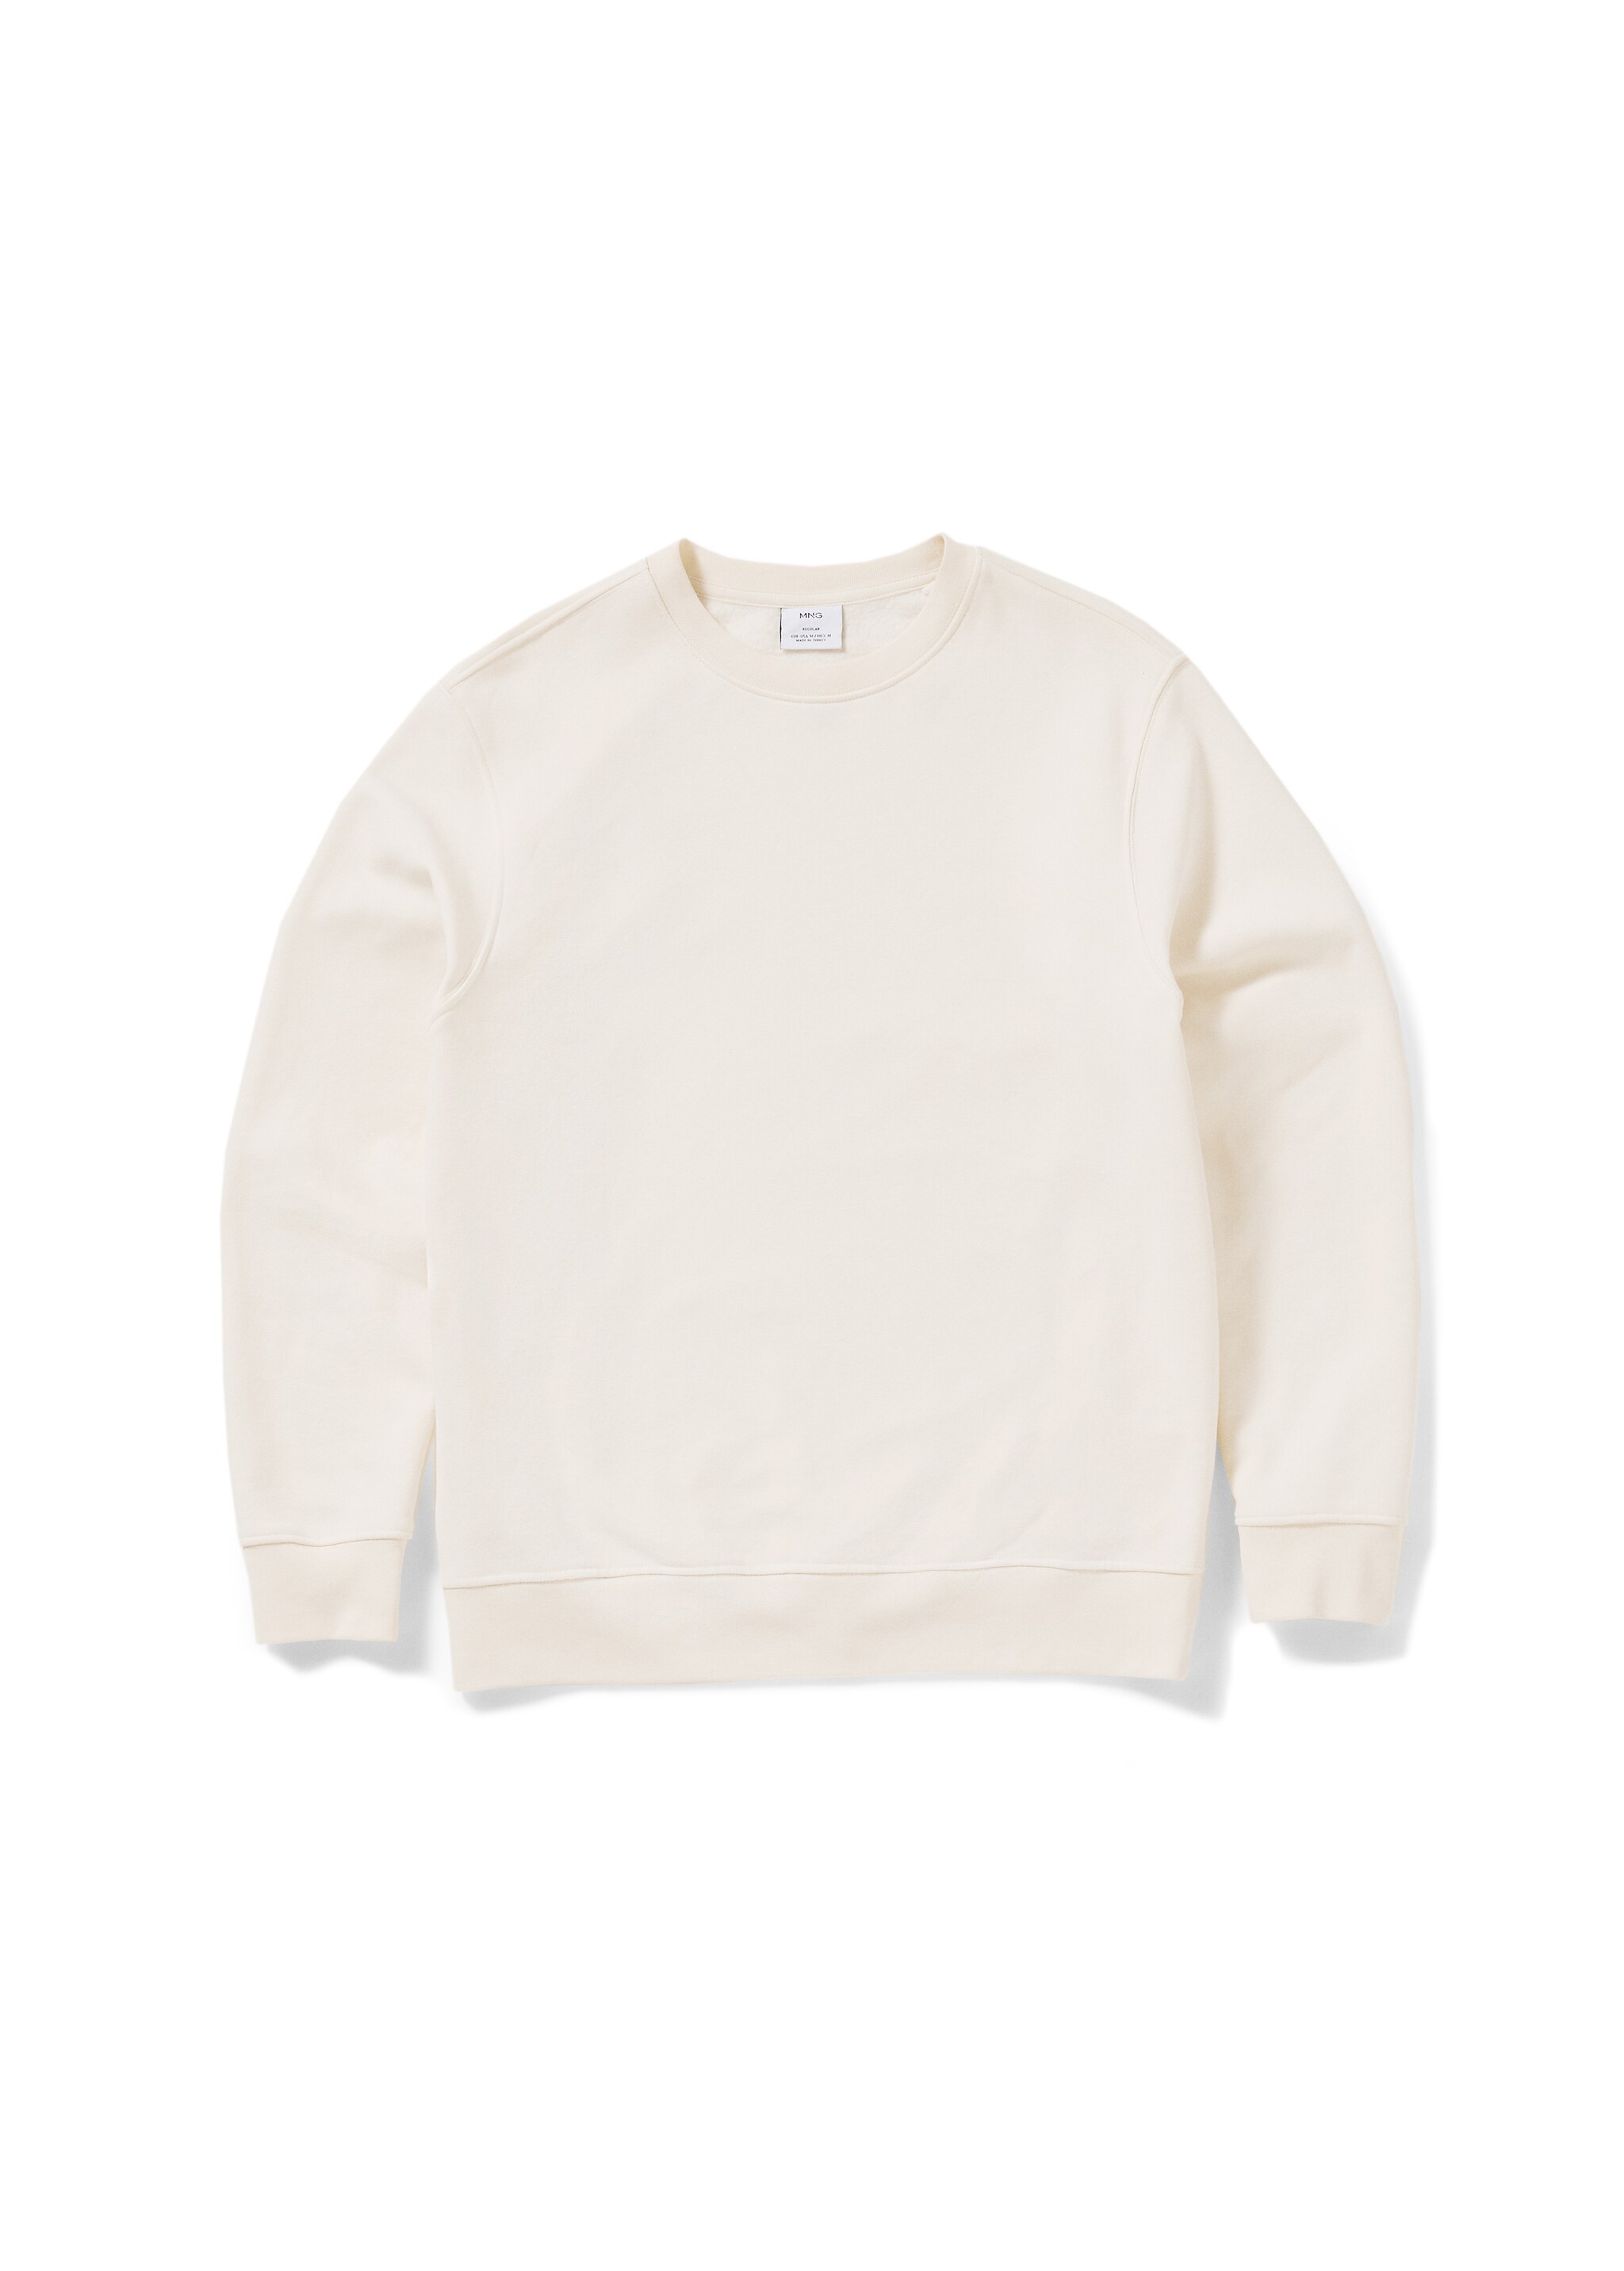 Plush cotton sweatshirt - Details of the article 9